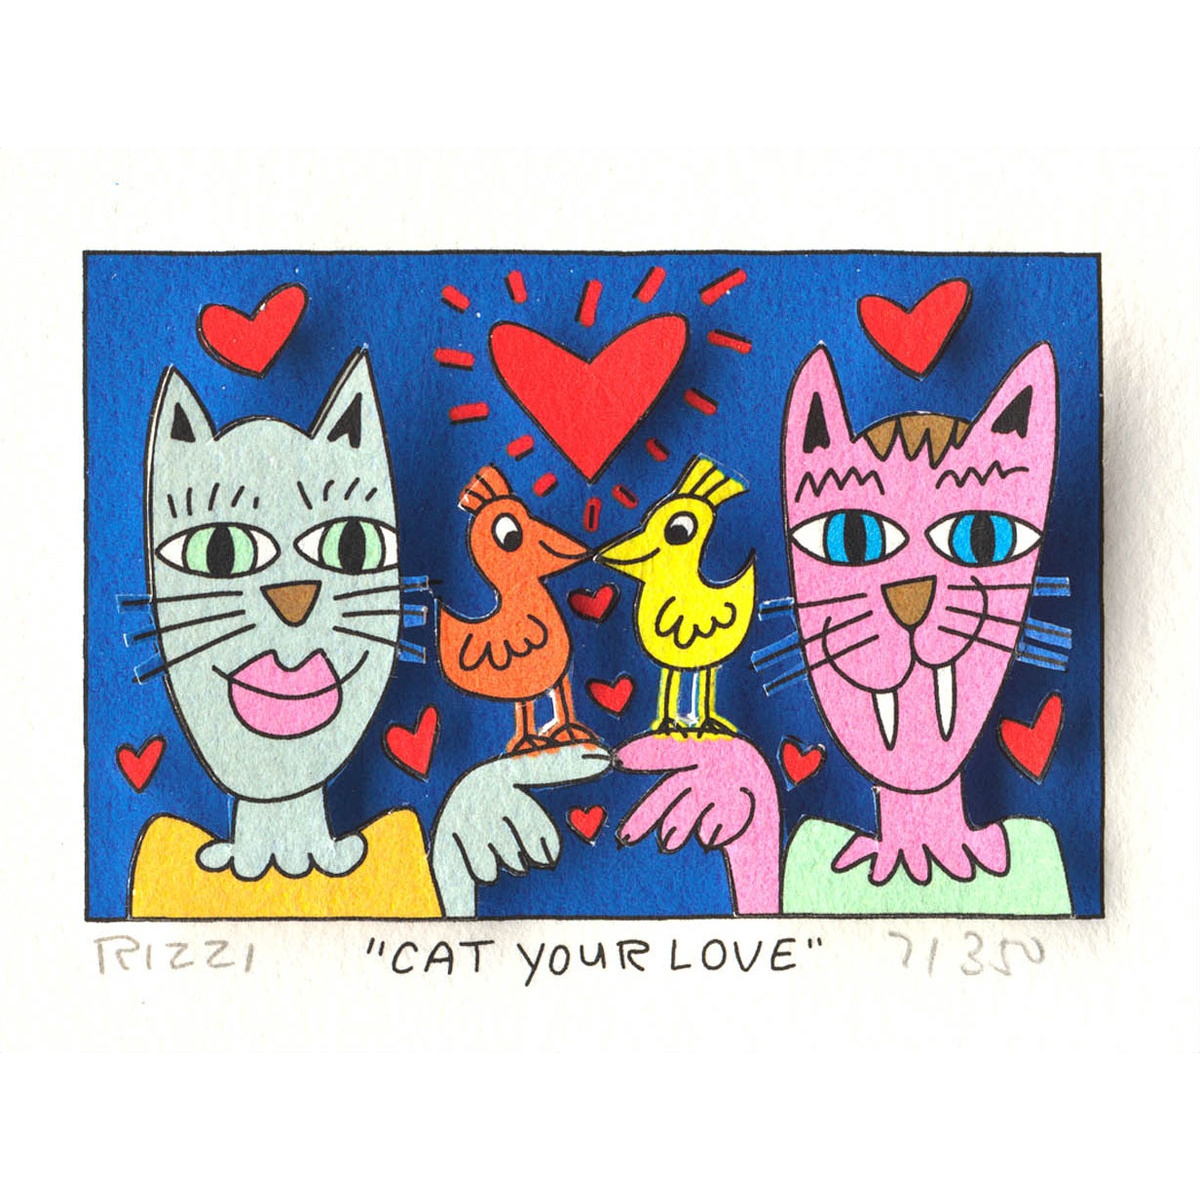 Cat your love